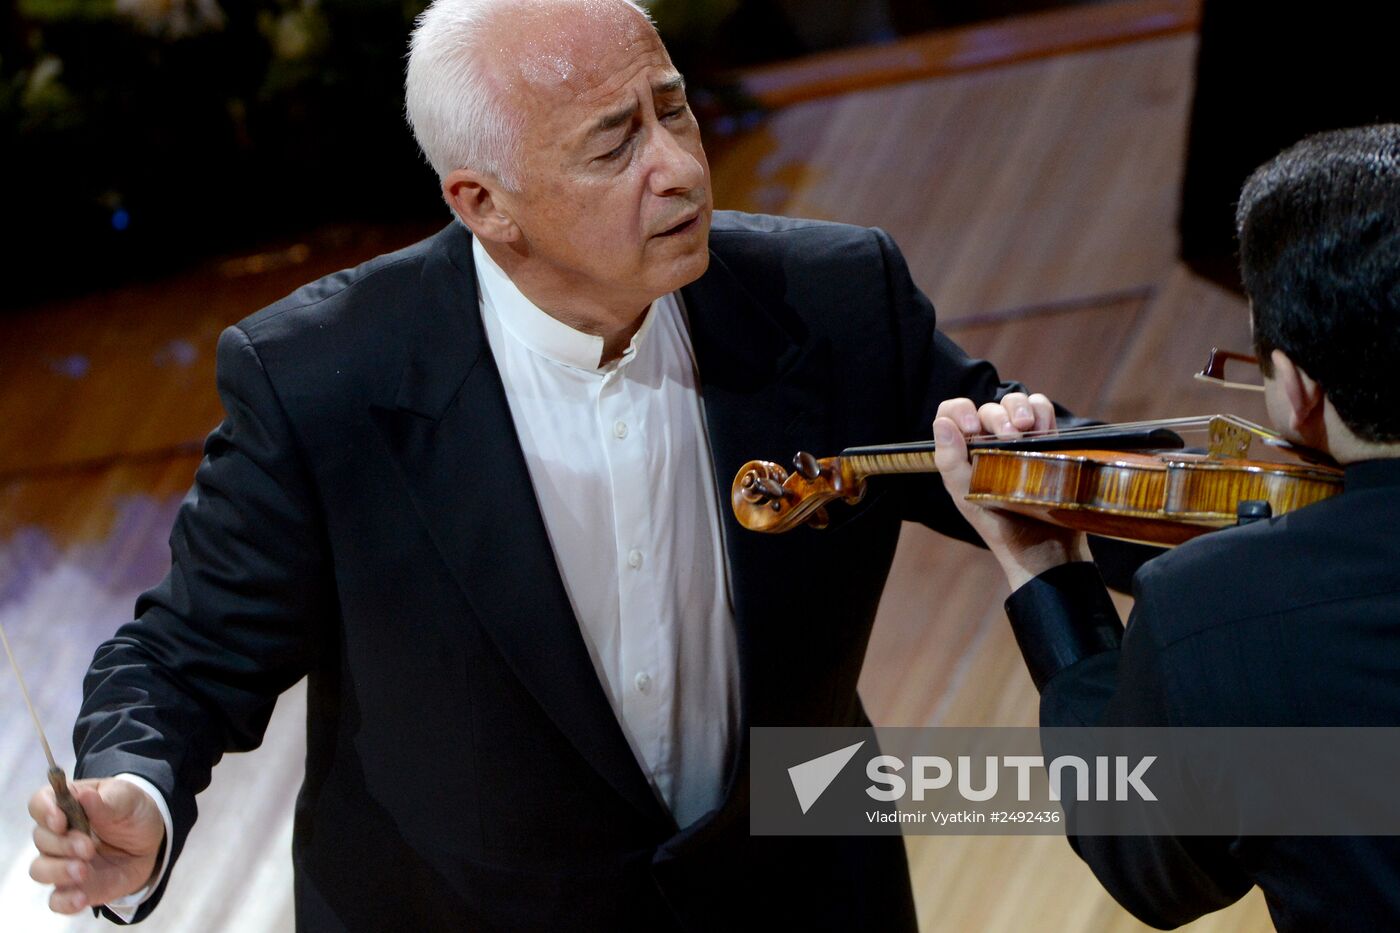 Vladimir Spivakov's aniversary concert